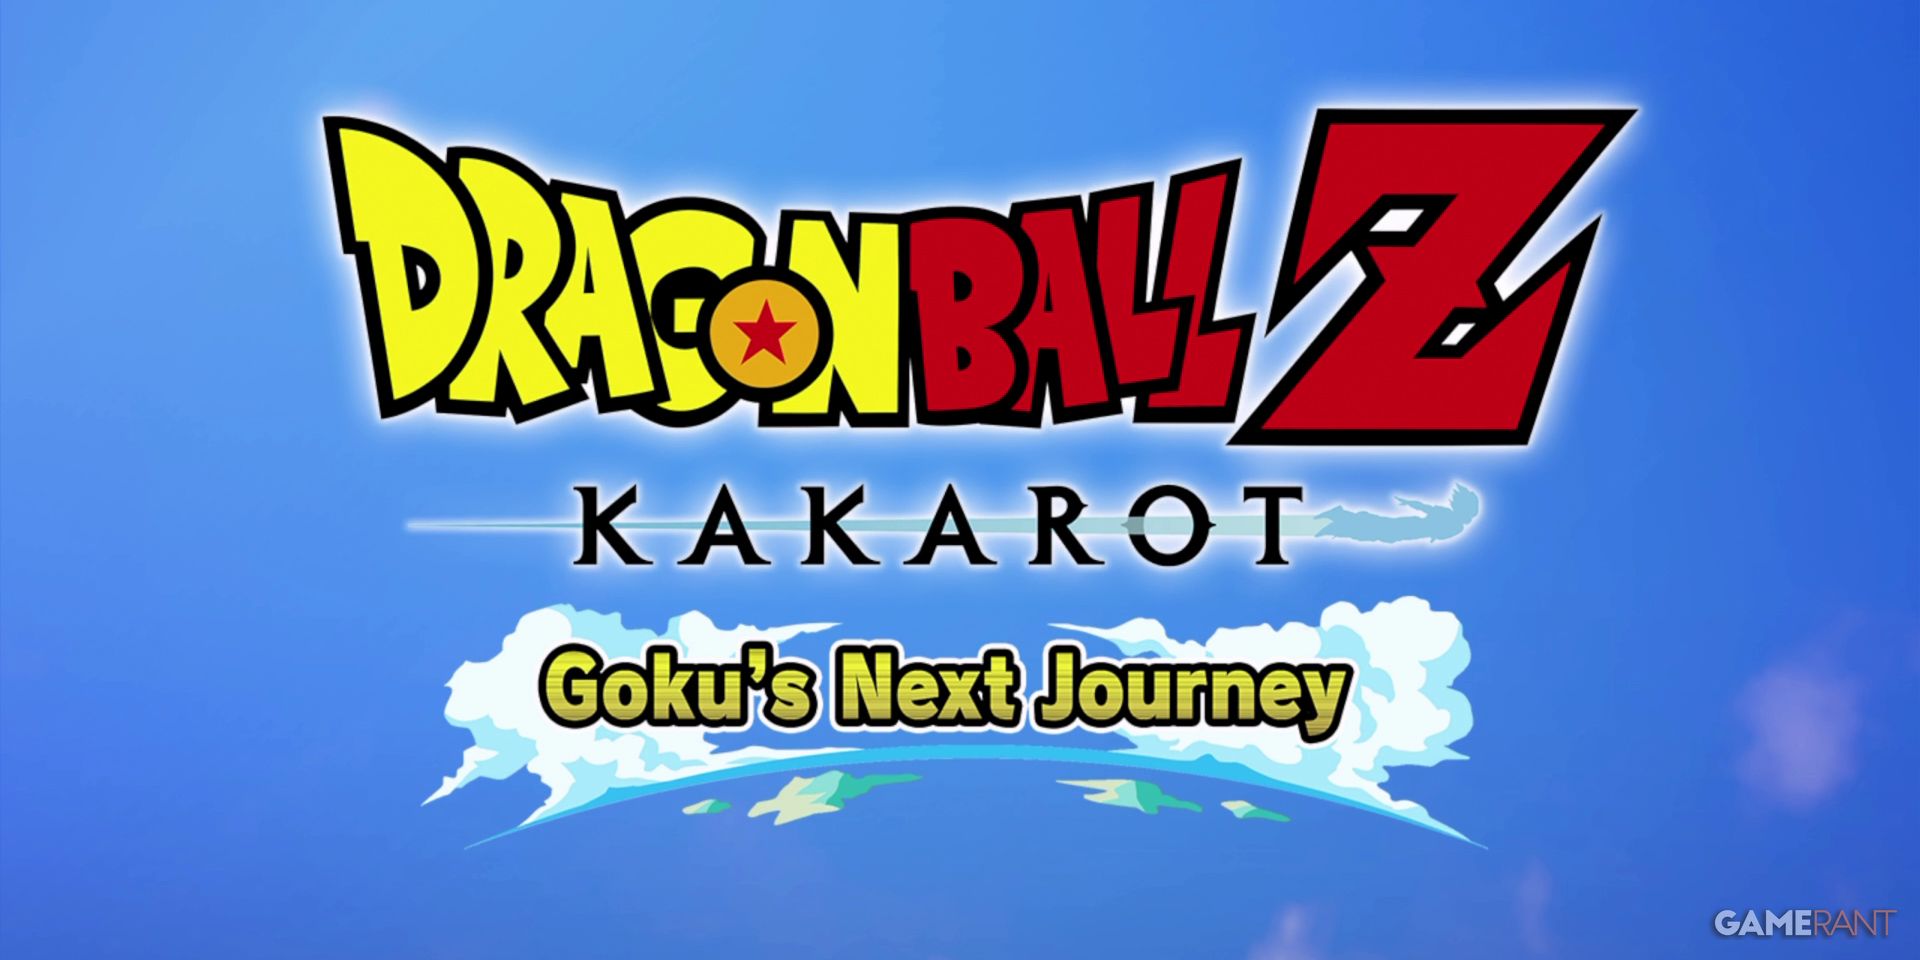 The title screen for Dragon Ball Z: Kakarot's Goku's Next Journey DLC